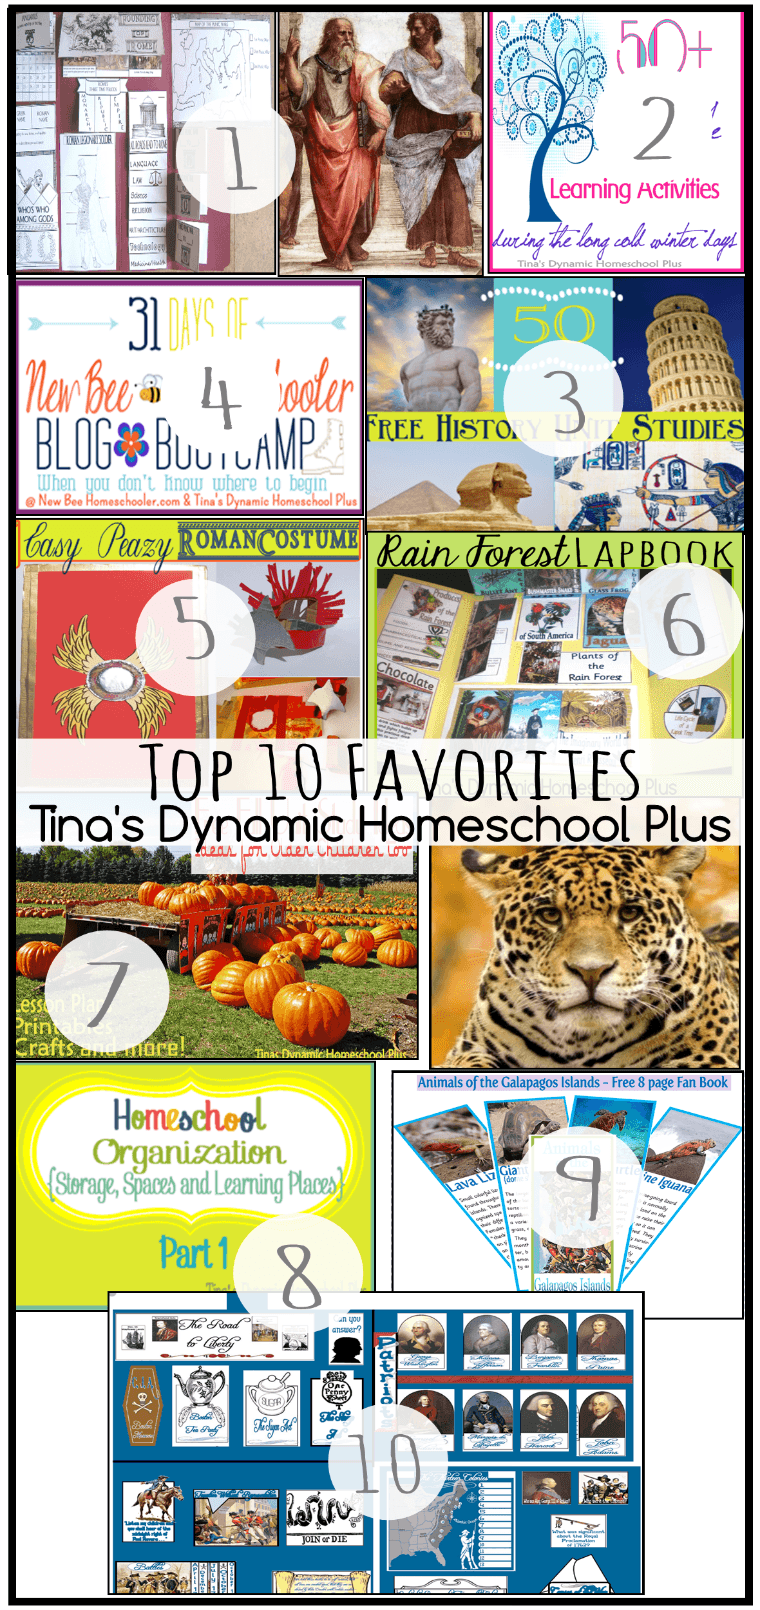 Top 10 Favorites Tina's Dynamic Homeschool Plus